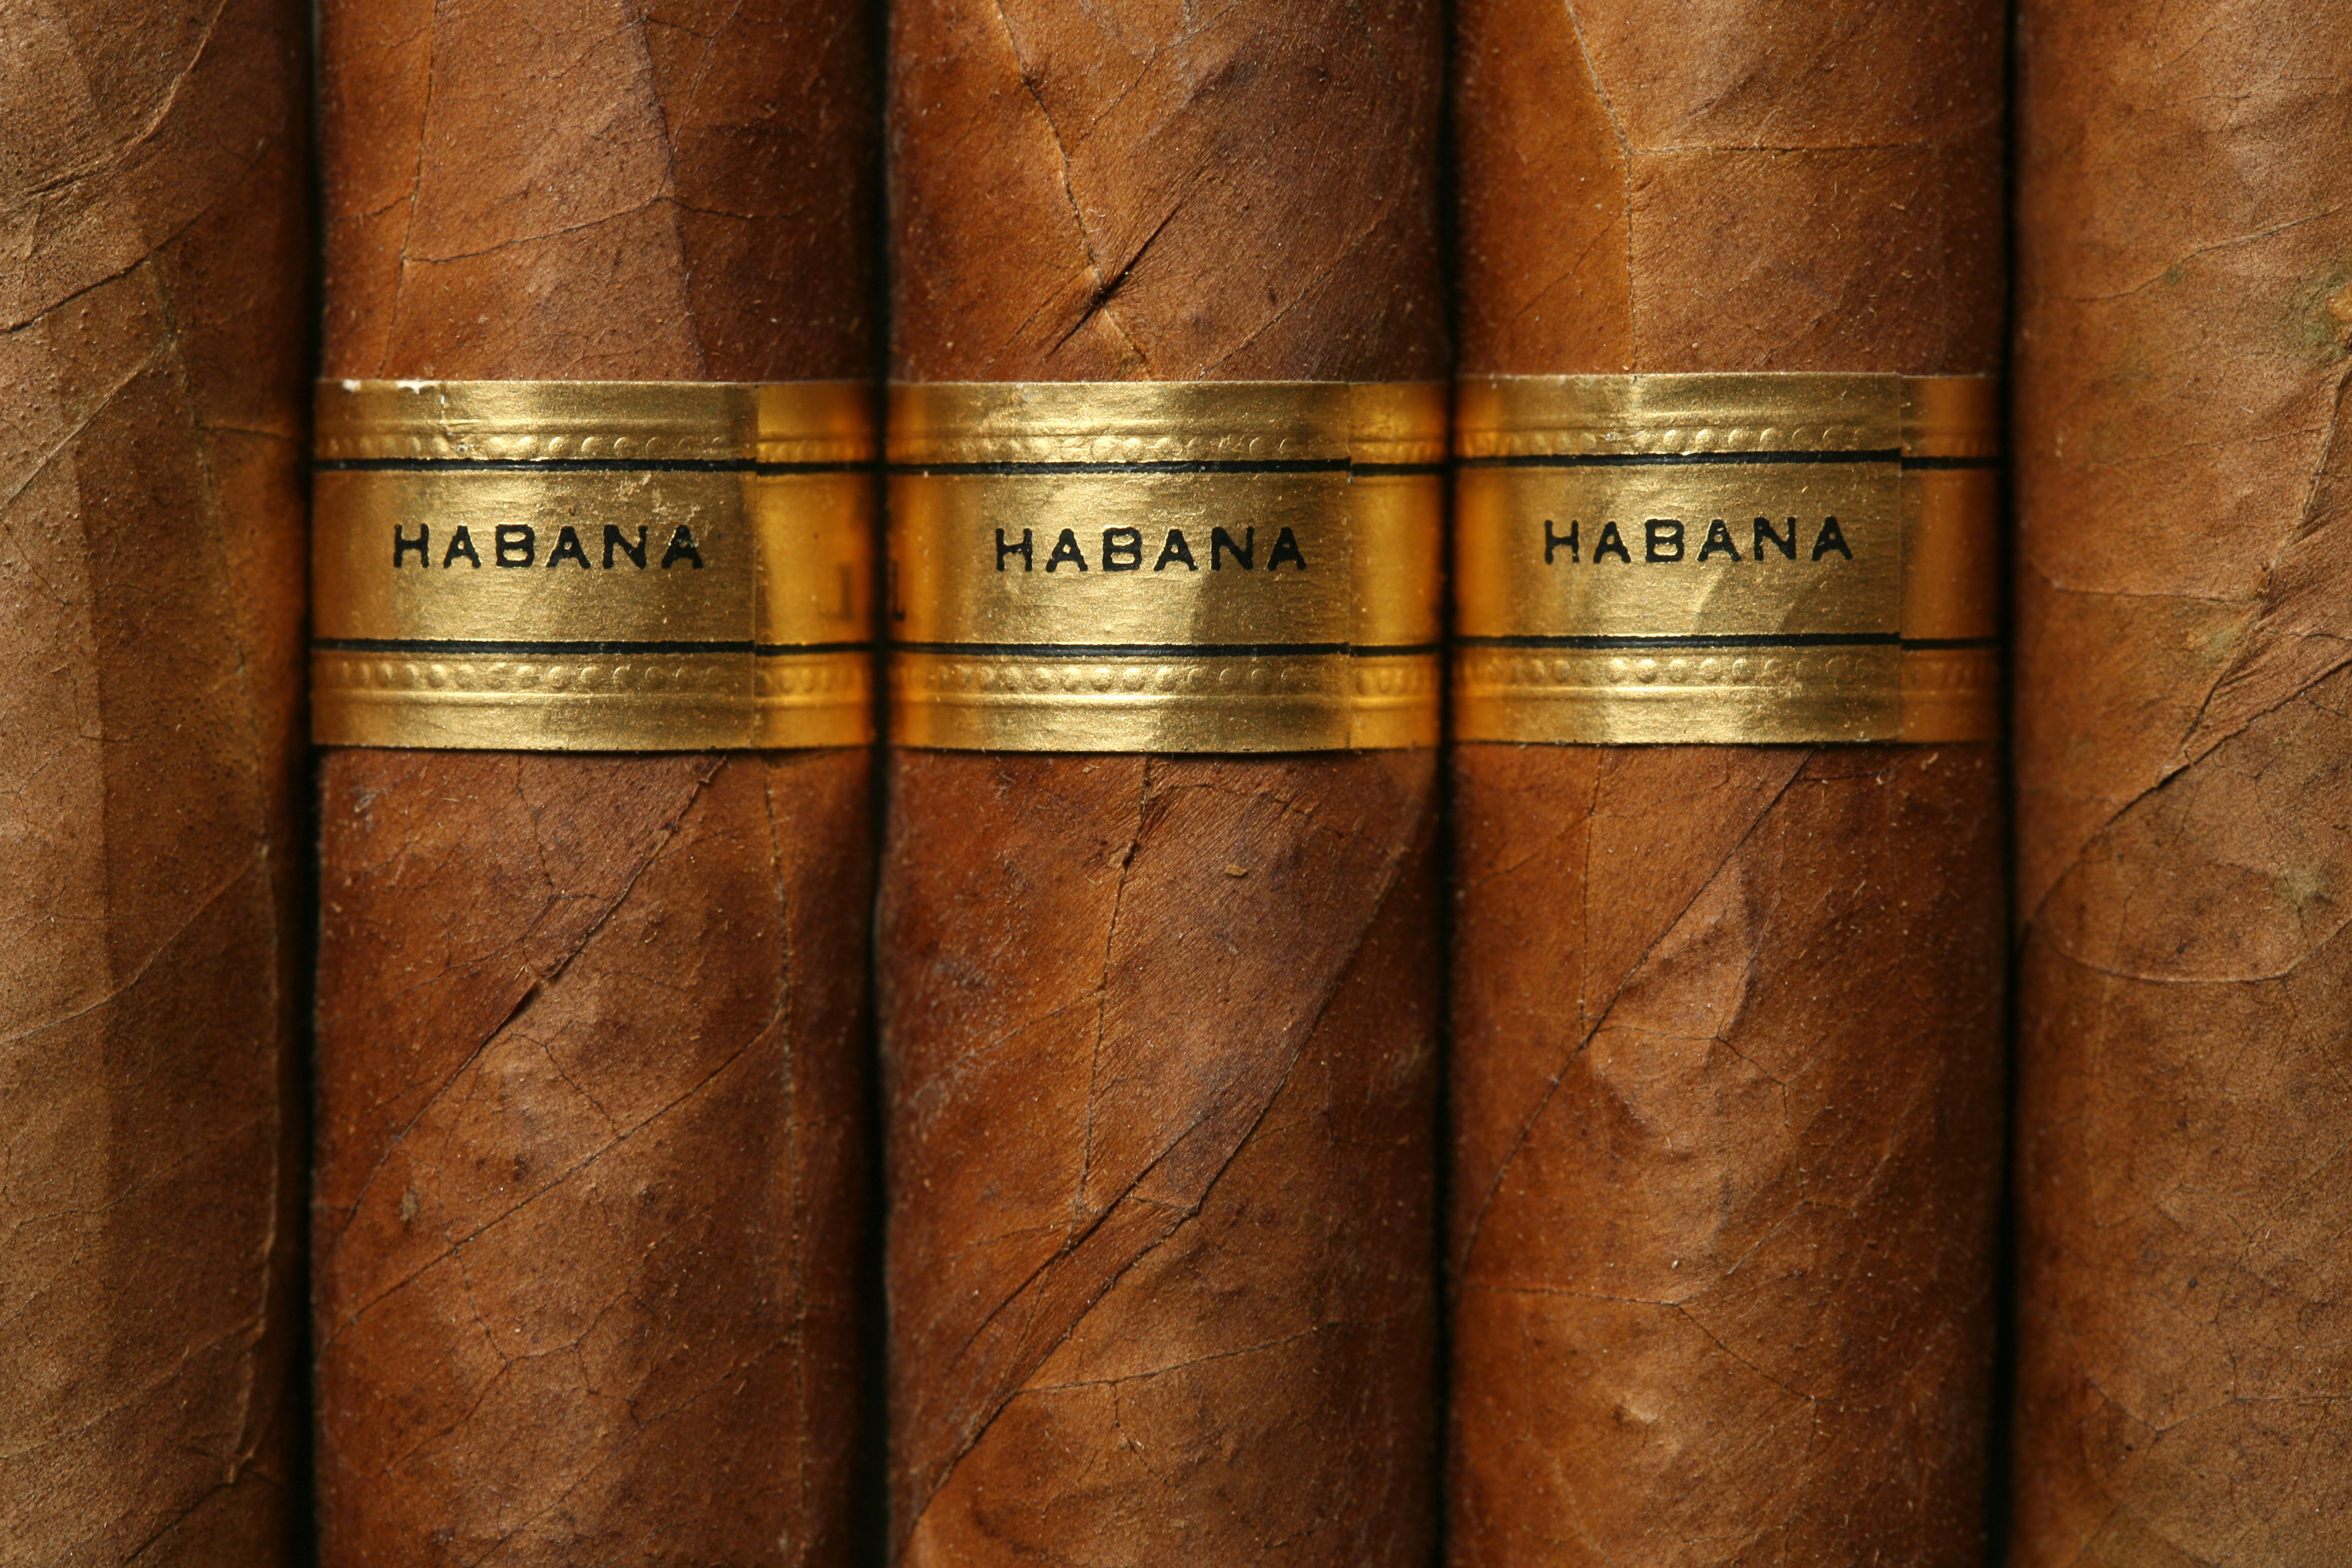 Cuban Cigars wallpaper   ForWallpapercom 4008x2672